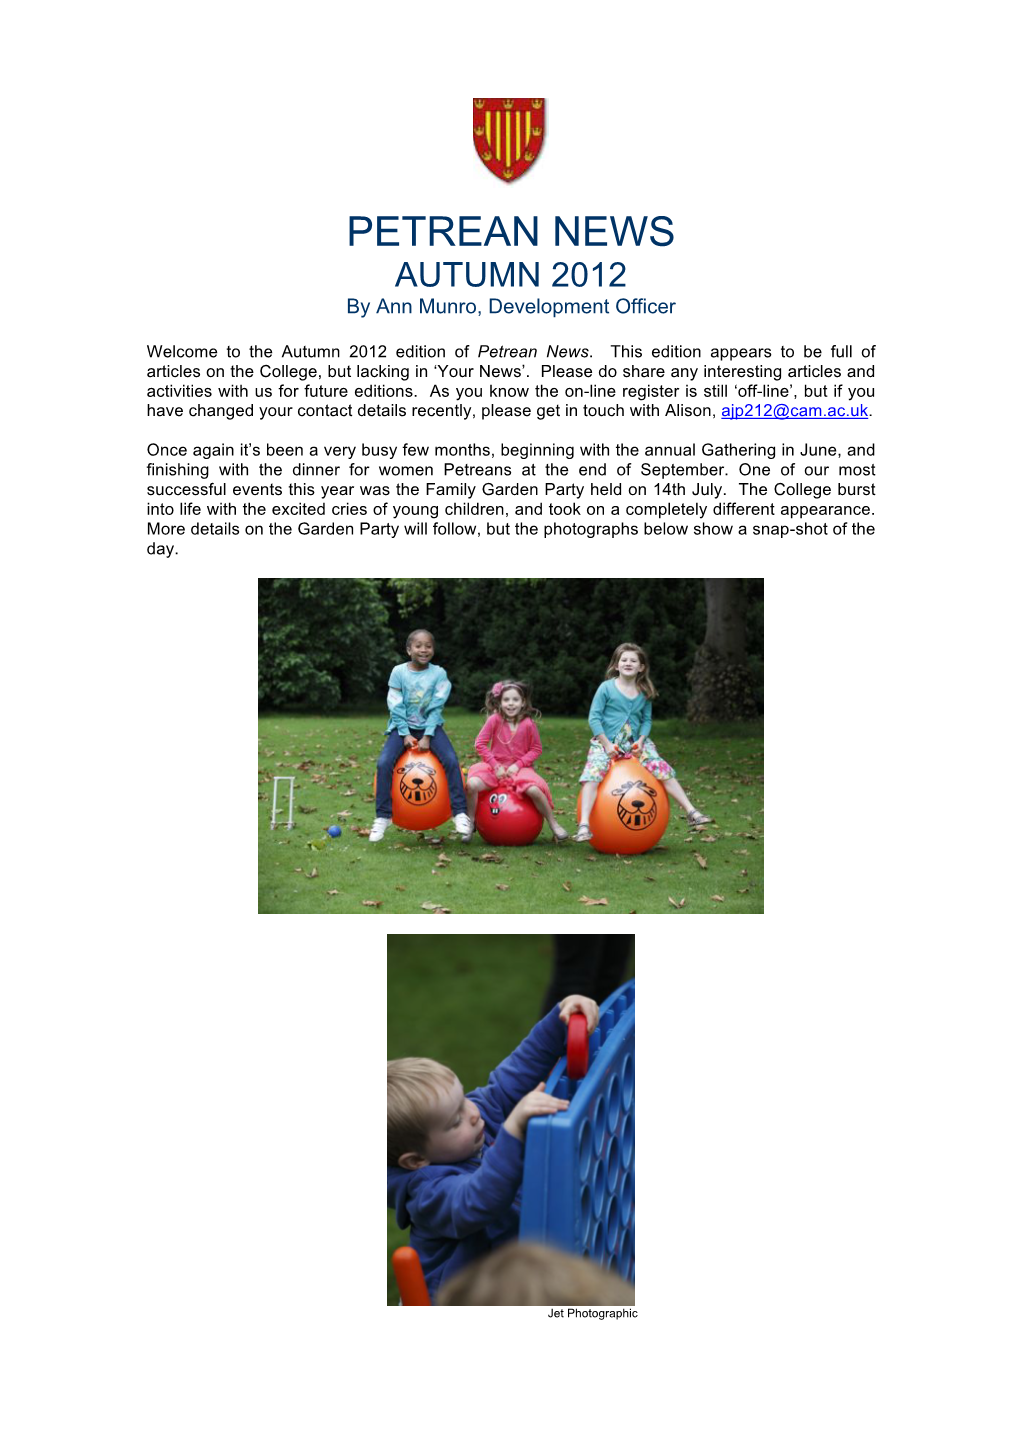 PETREAN NEWS AUTUMN 2012 by Ann Munro, Development Officer